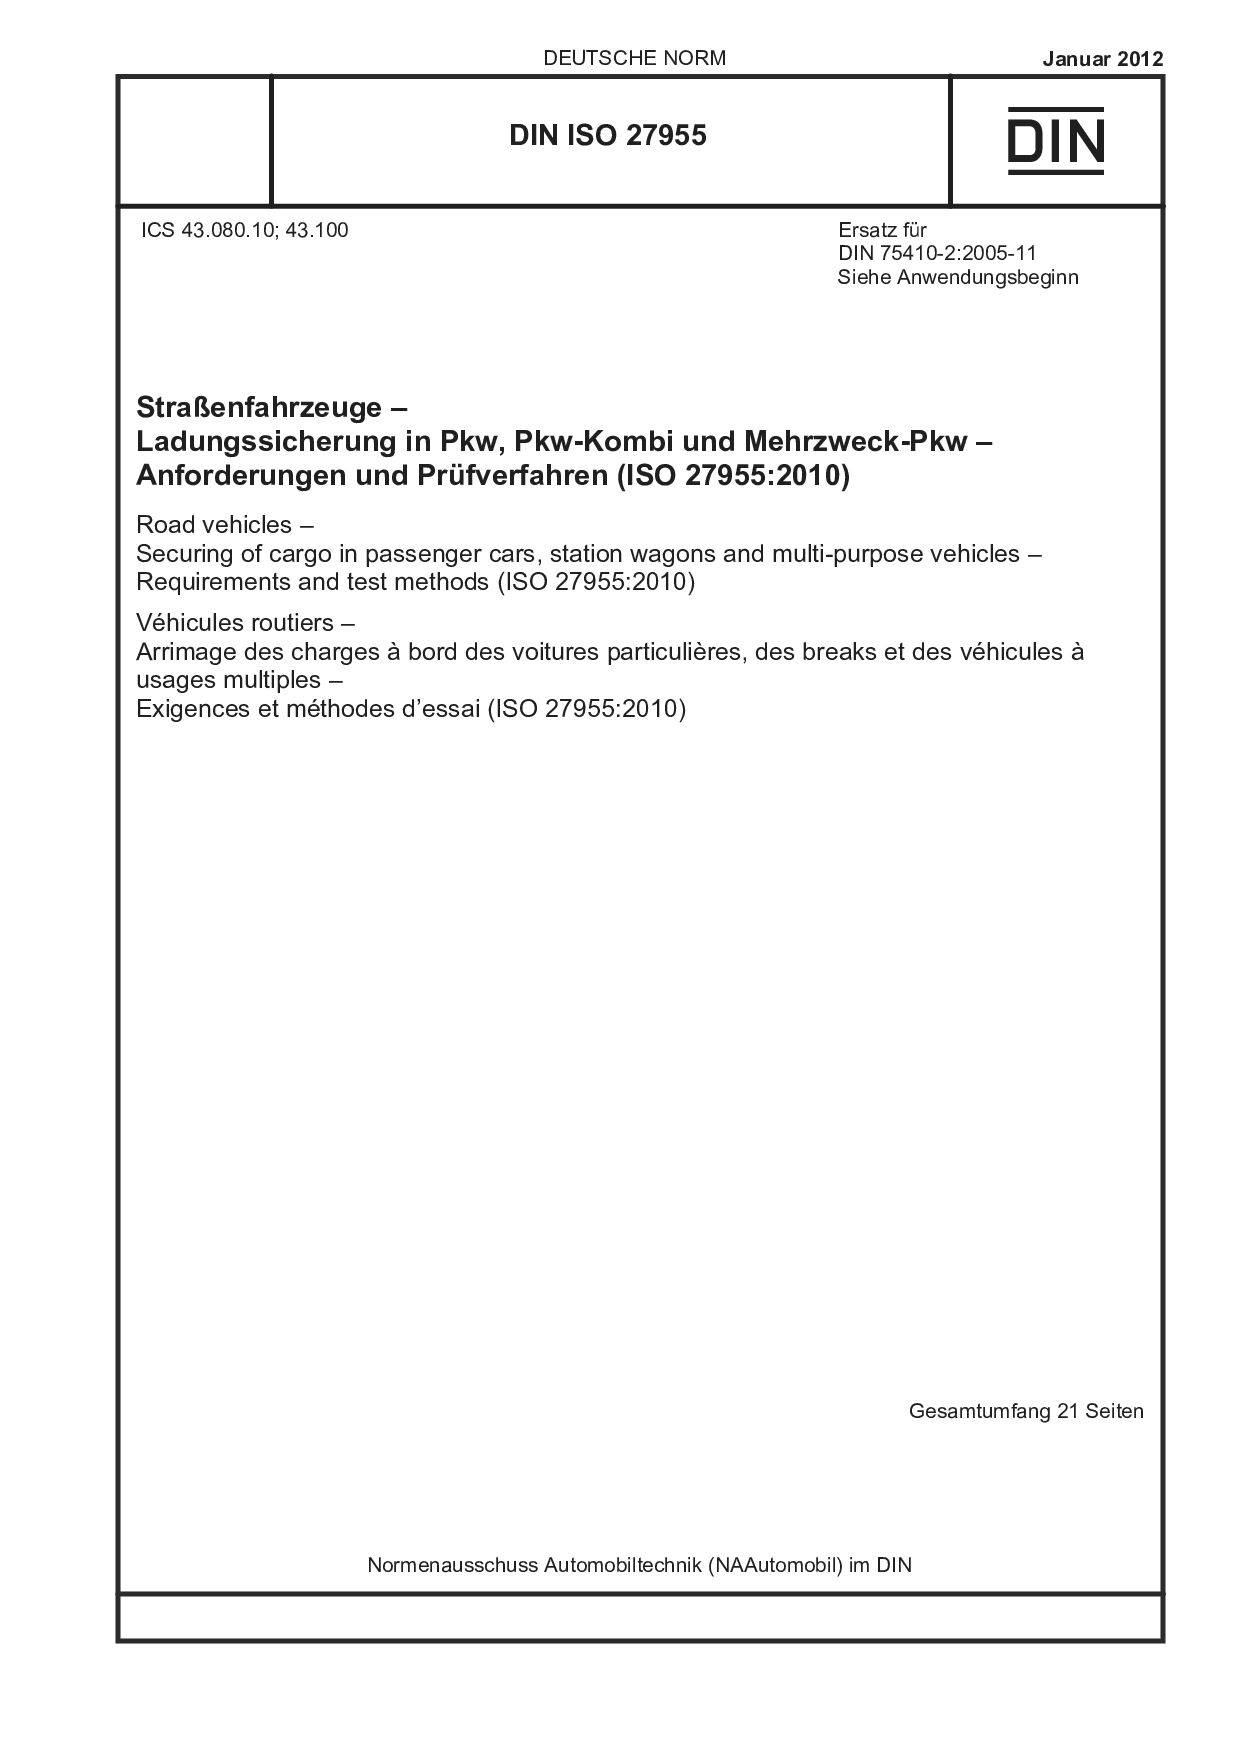 DIN ISO 27955:2012-01